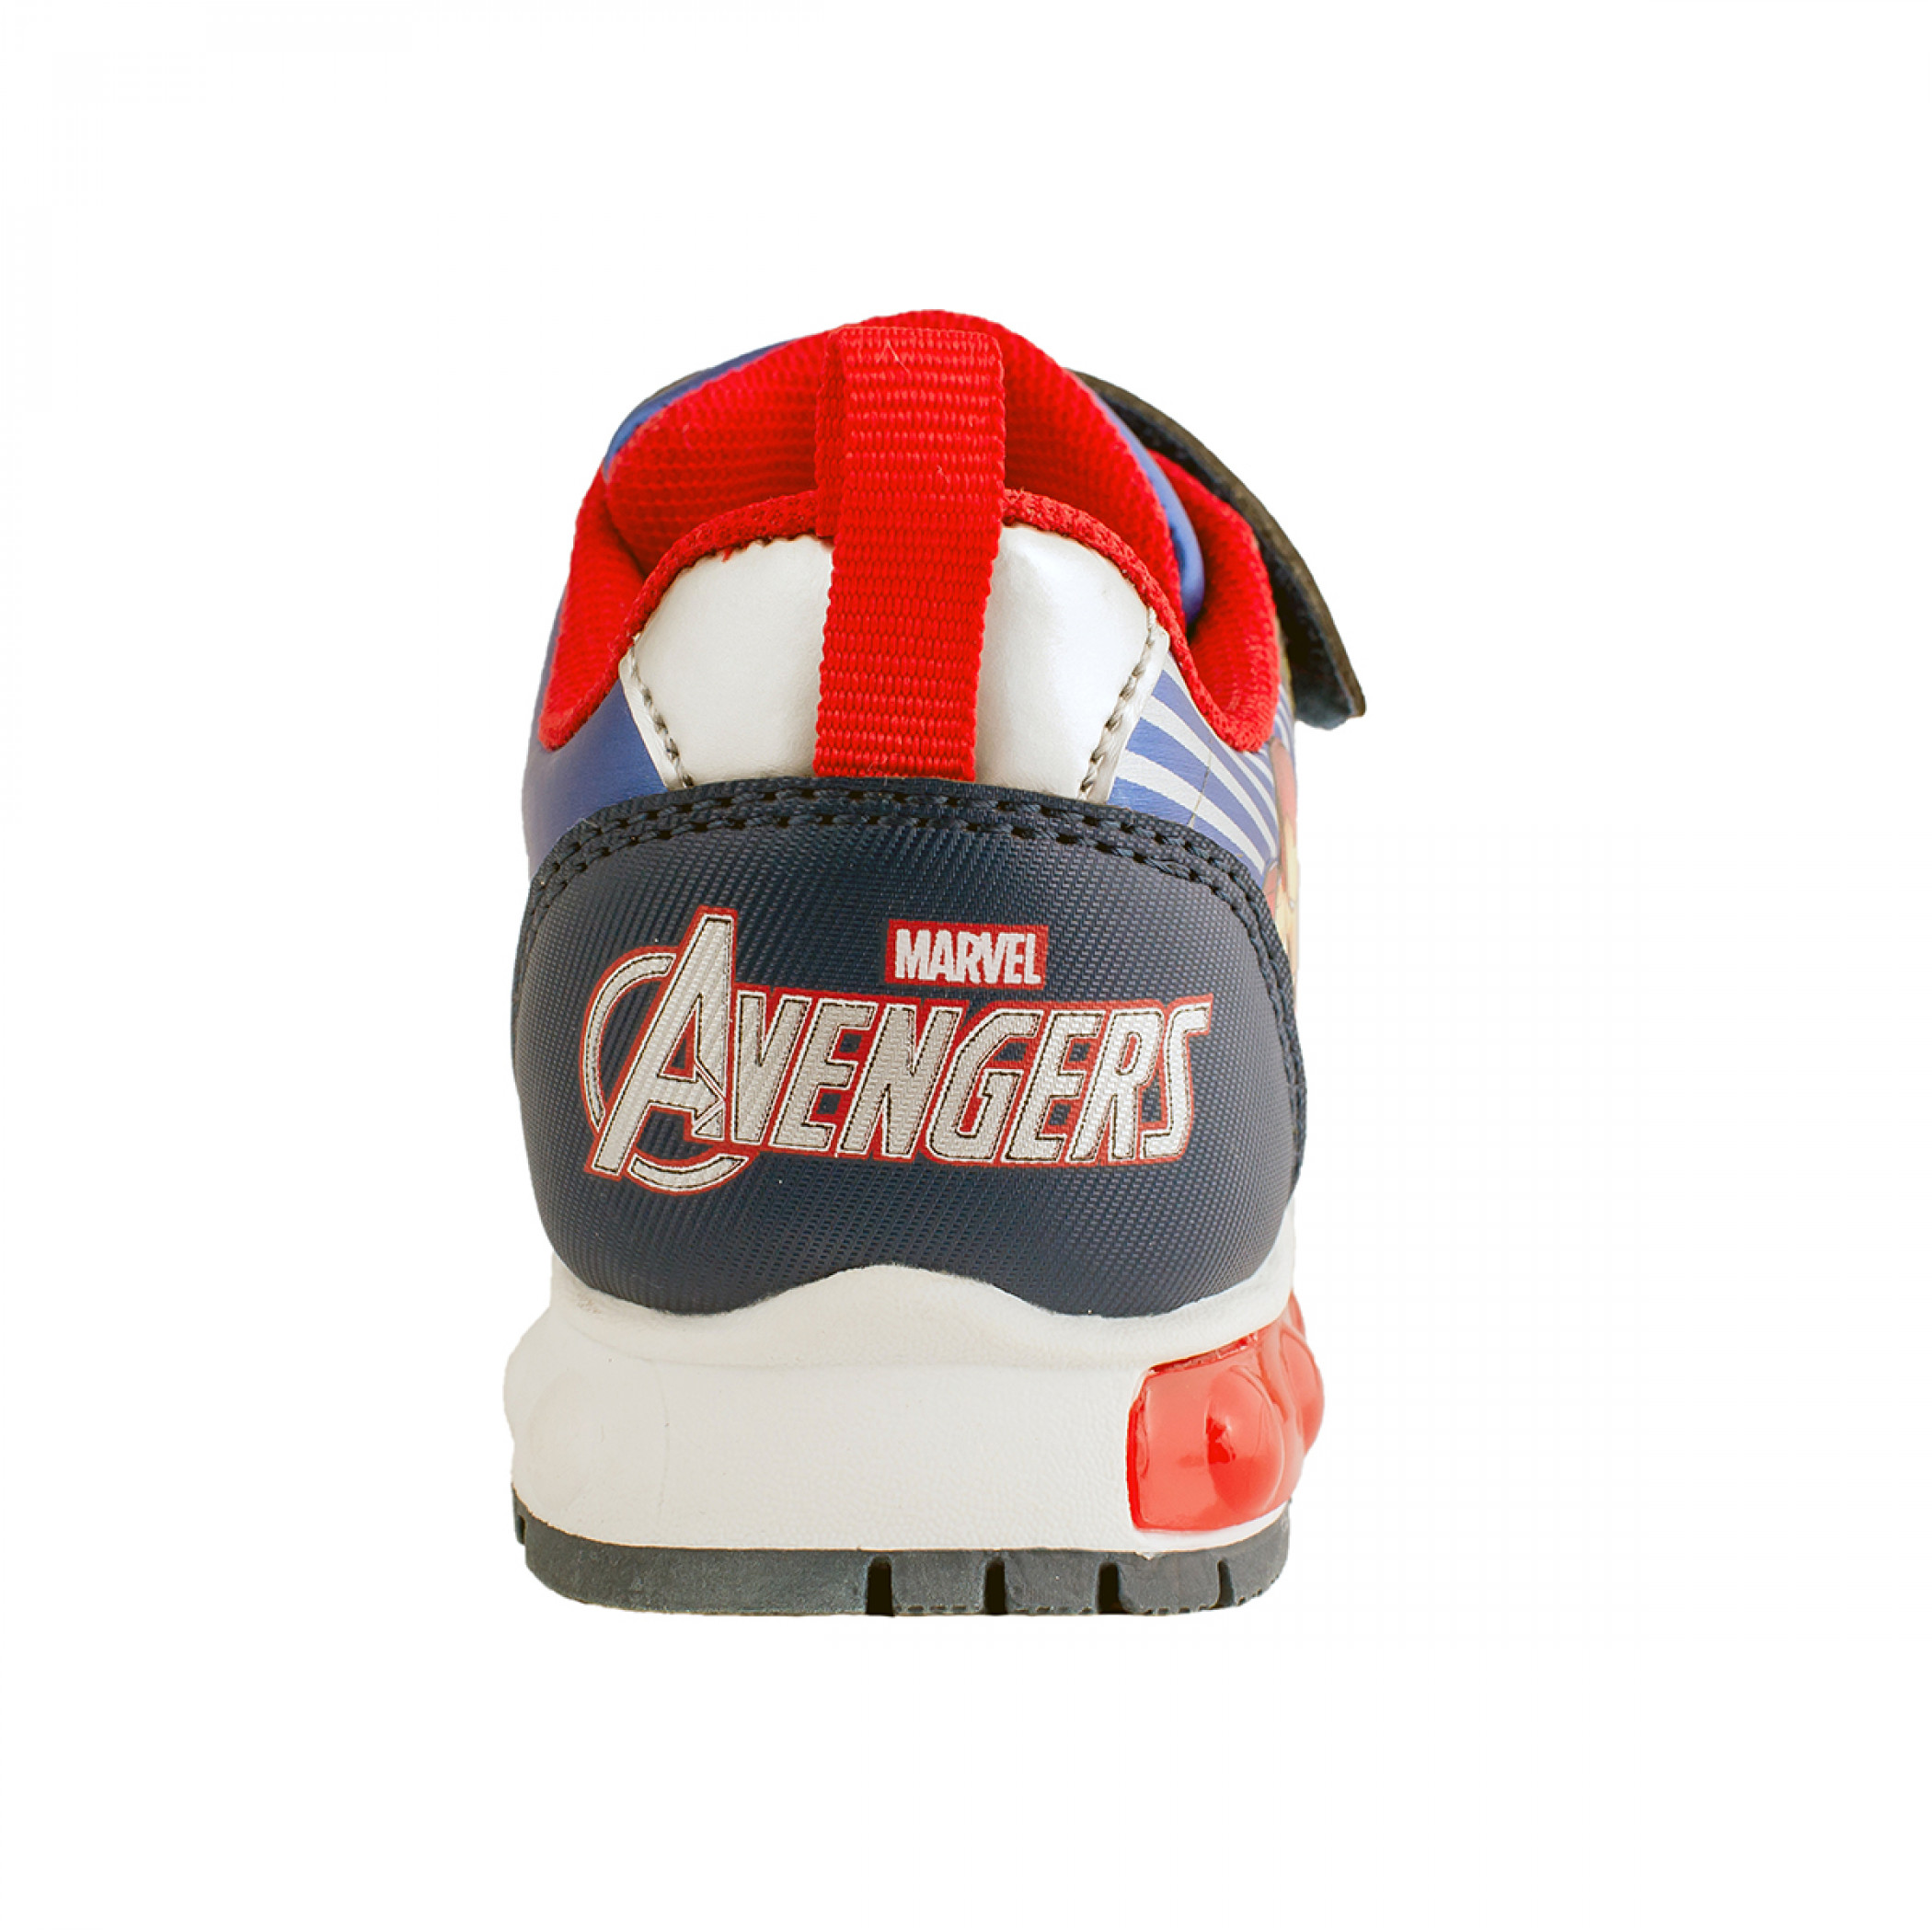 Avengers Assemble Kids Light Up Shoes